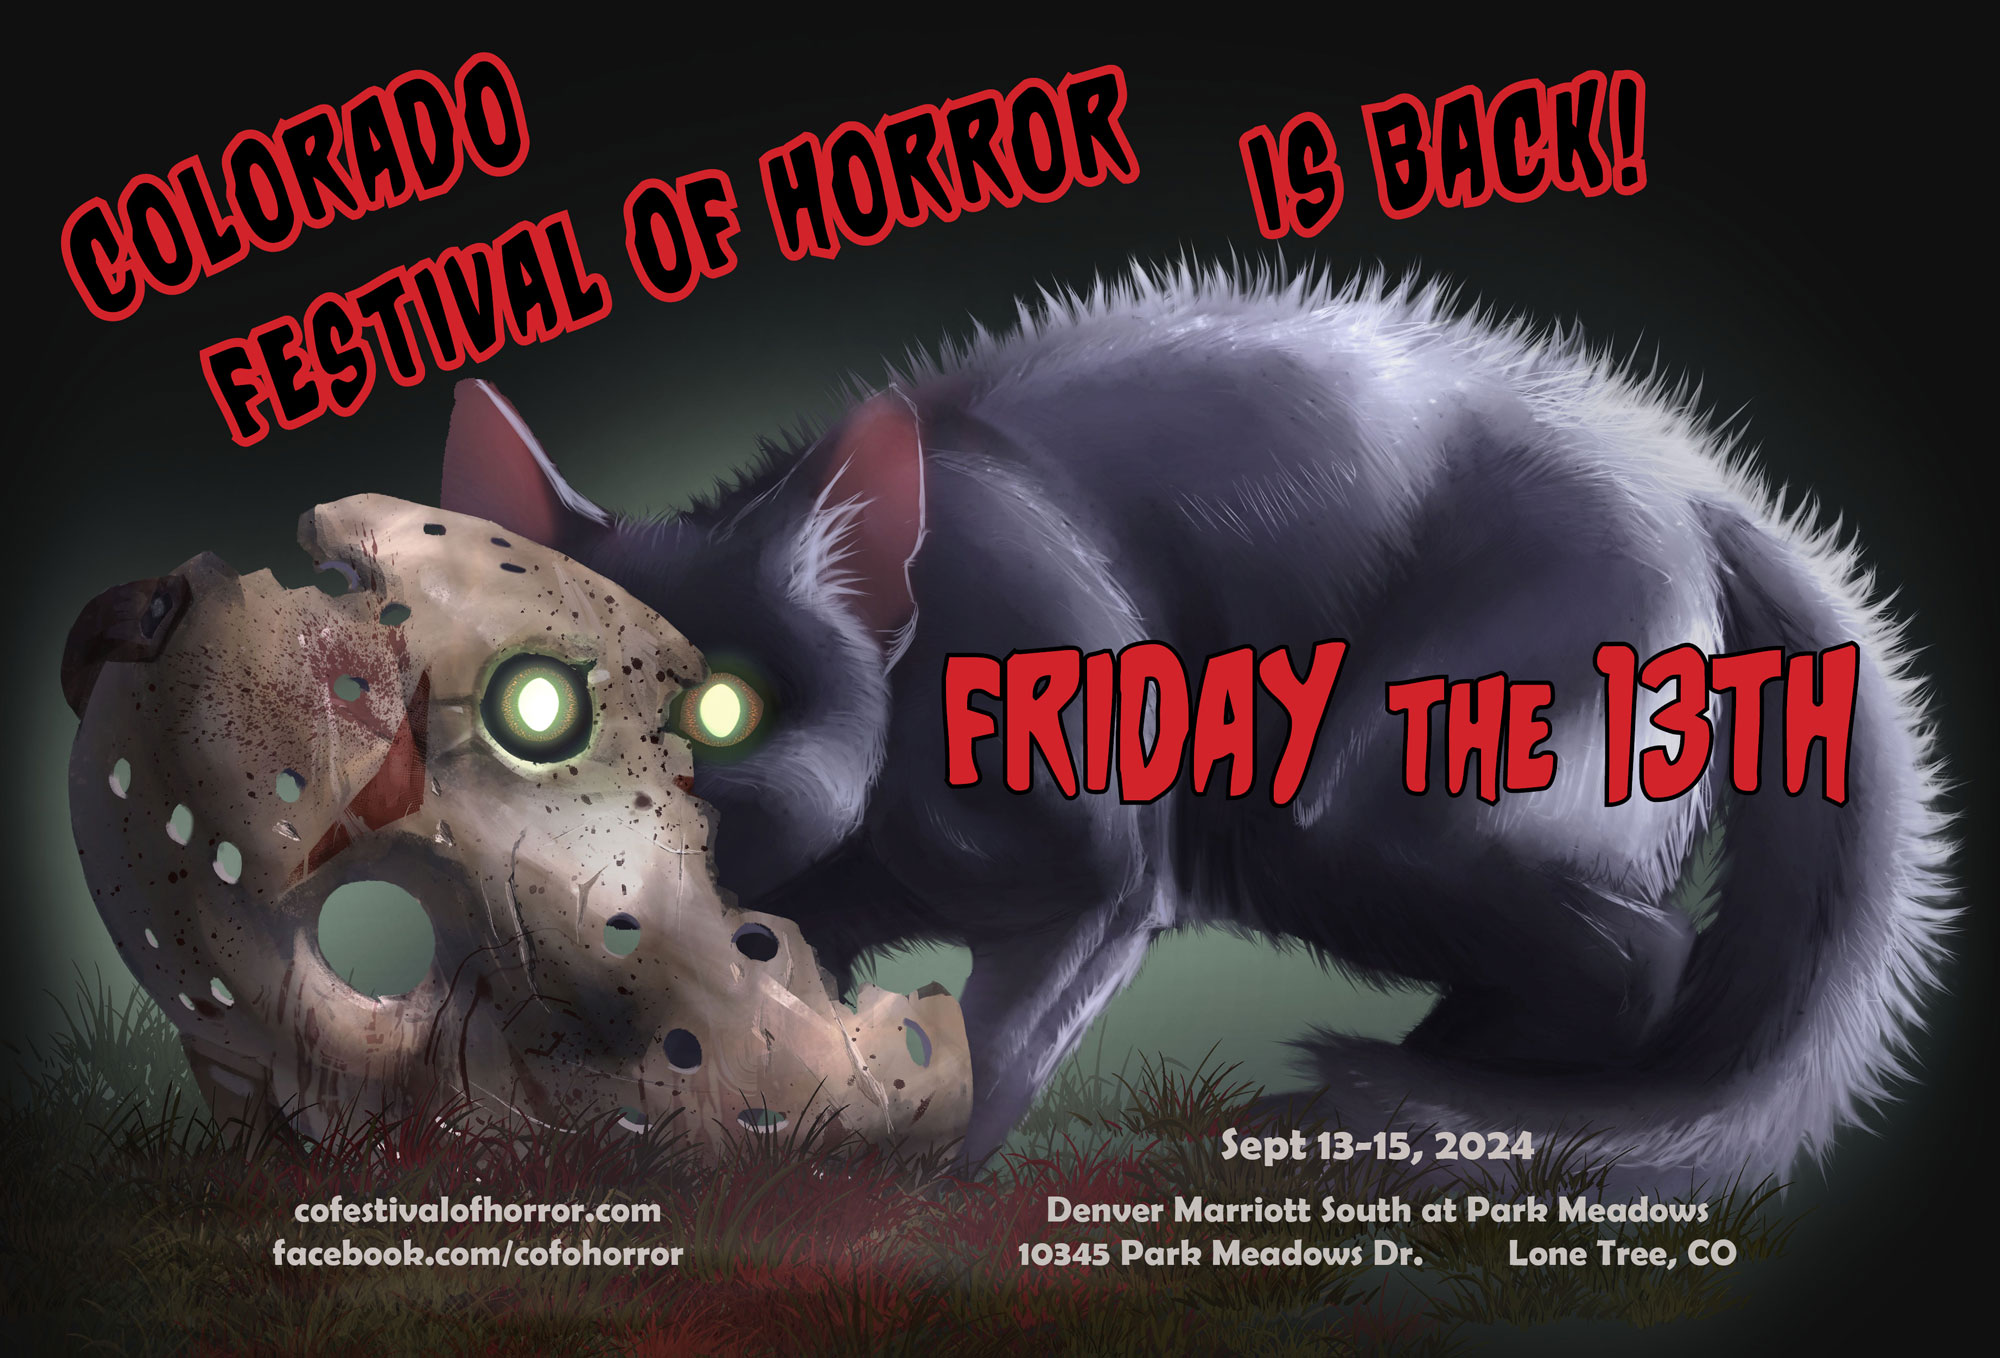 Colorado Festical of Horror Returns September 13-15, 2024 with image black cat and Jason mask